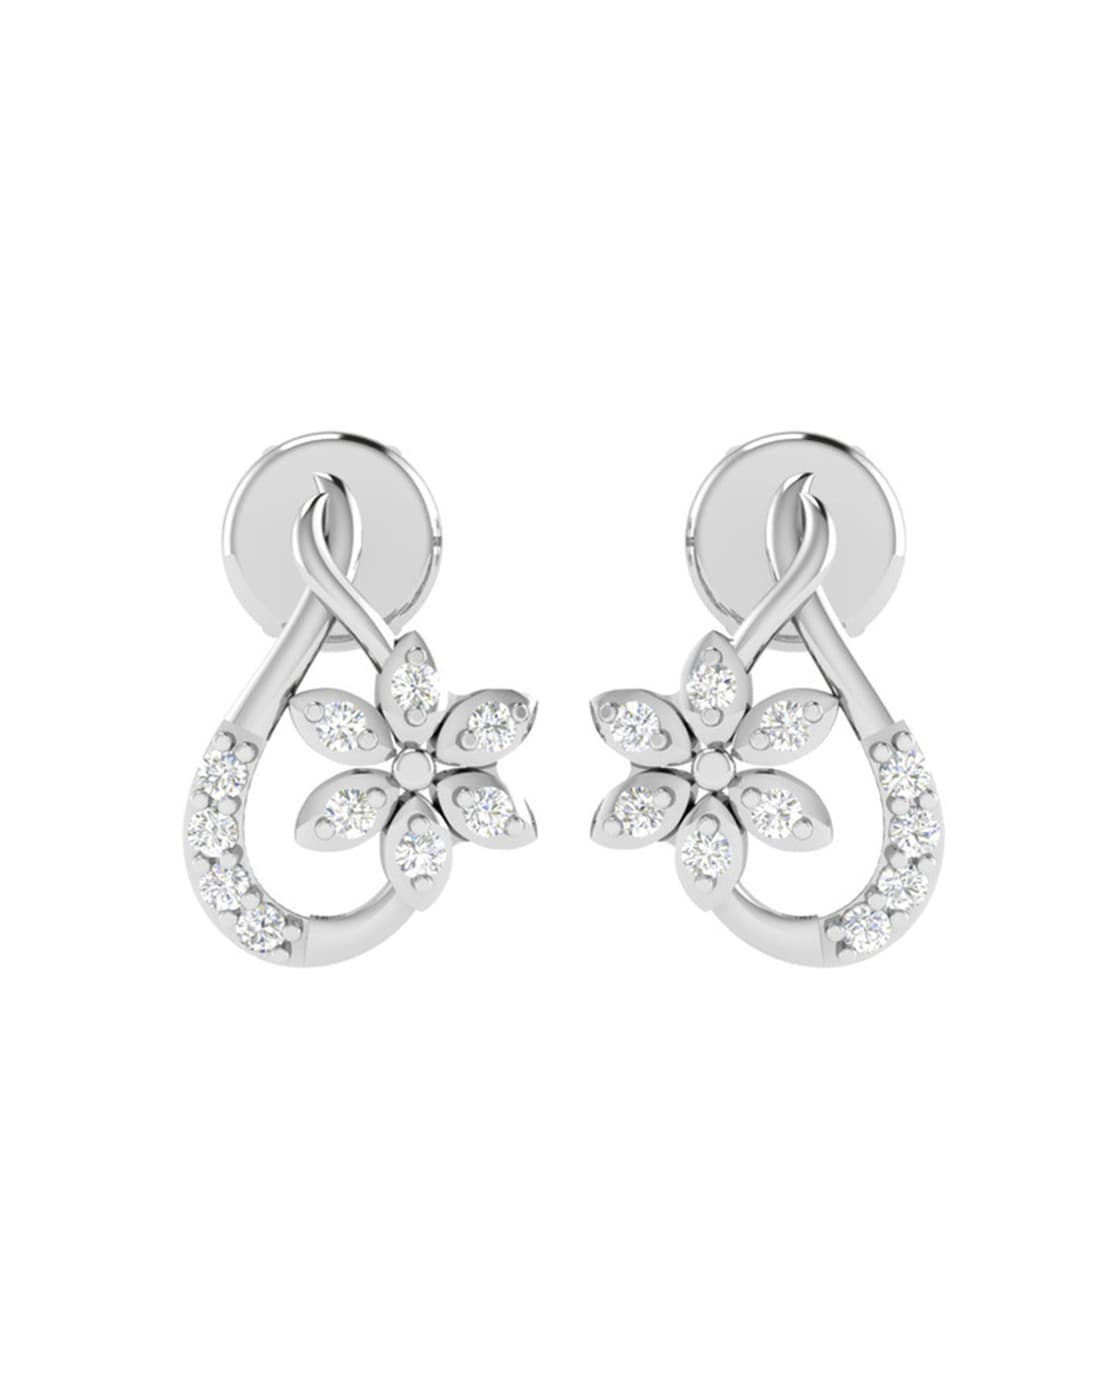 9ct White Gold, Diamond Stud Earrings | Pascoes